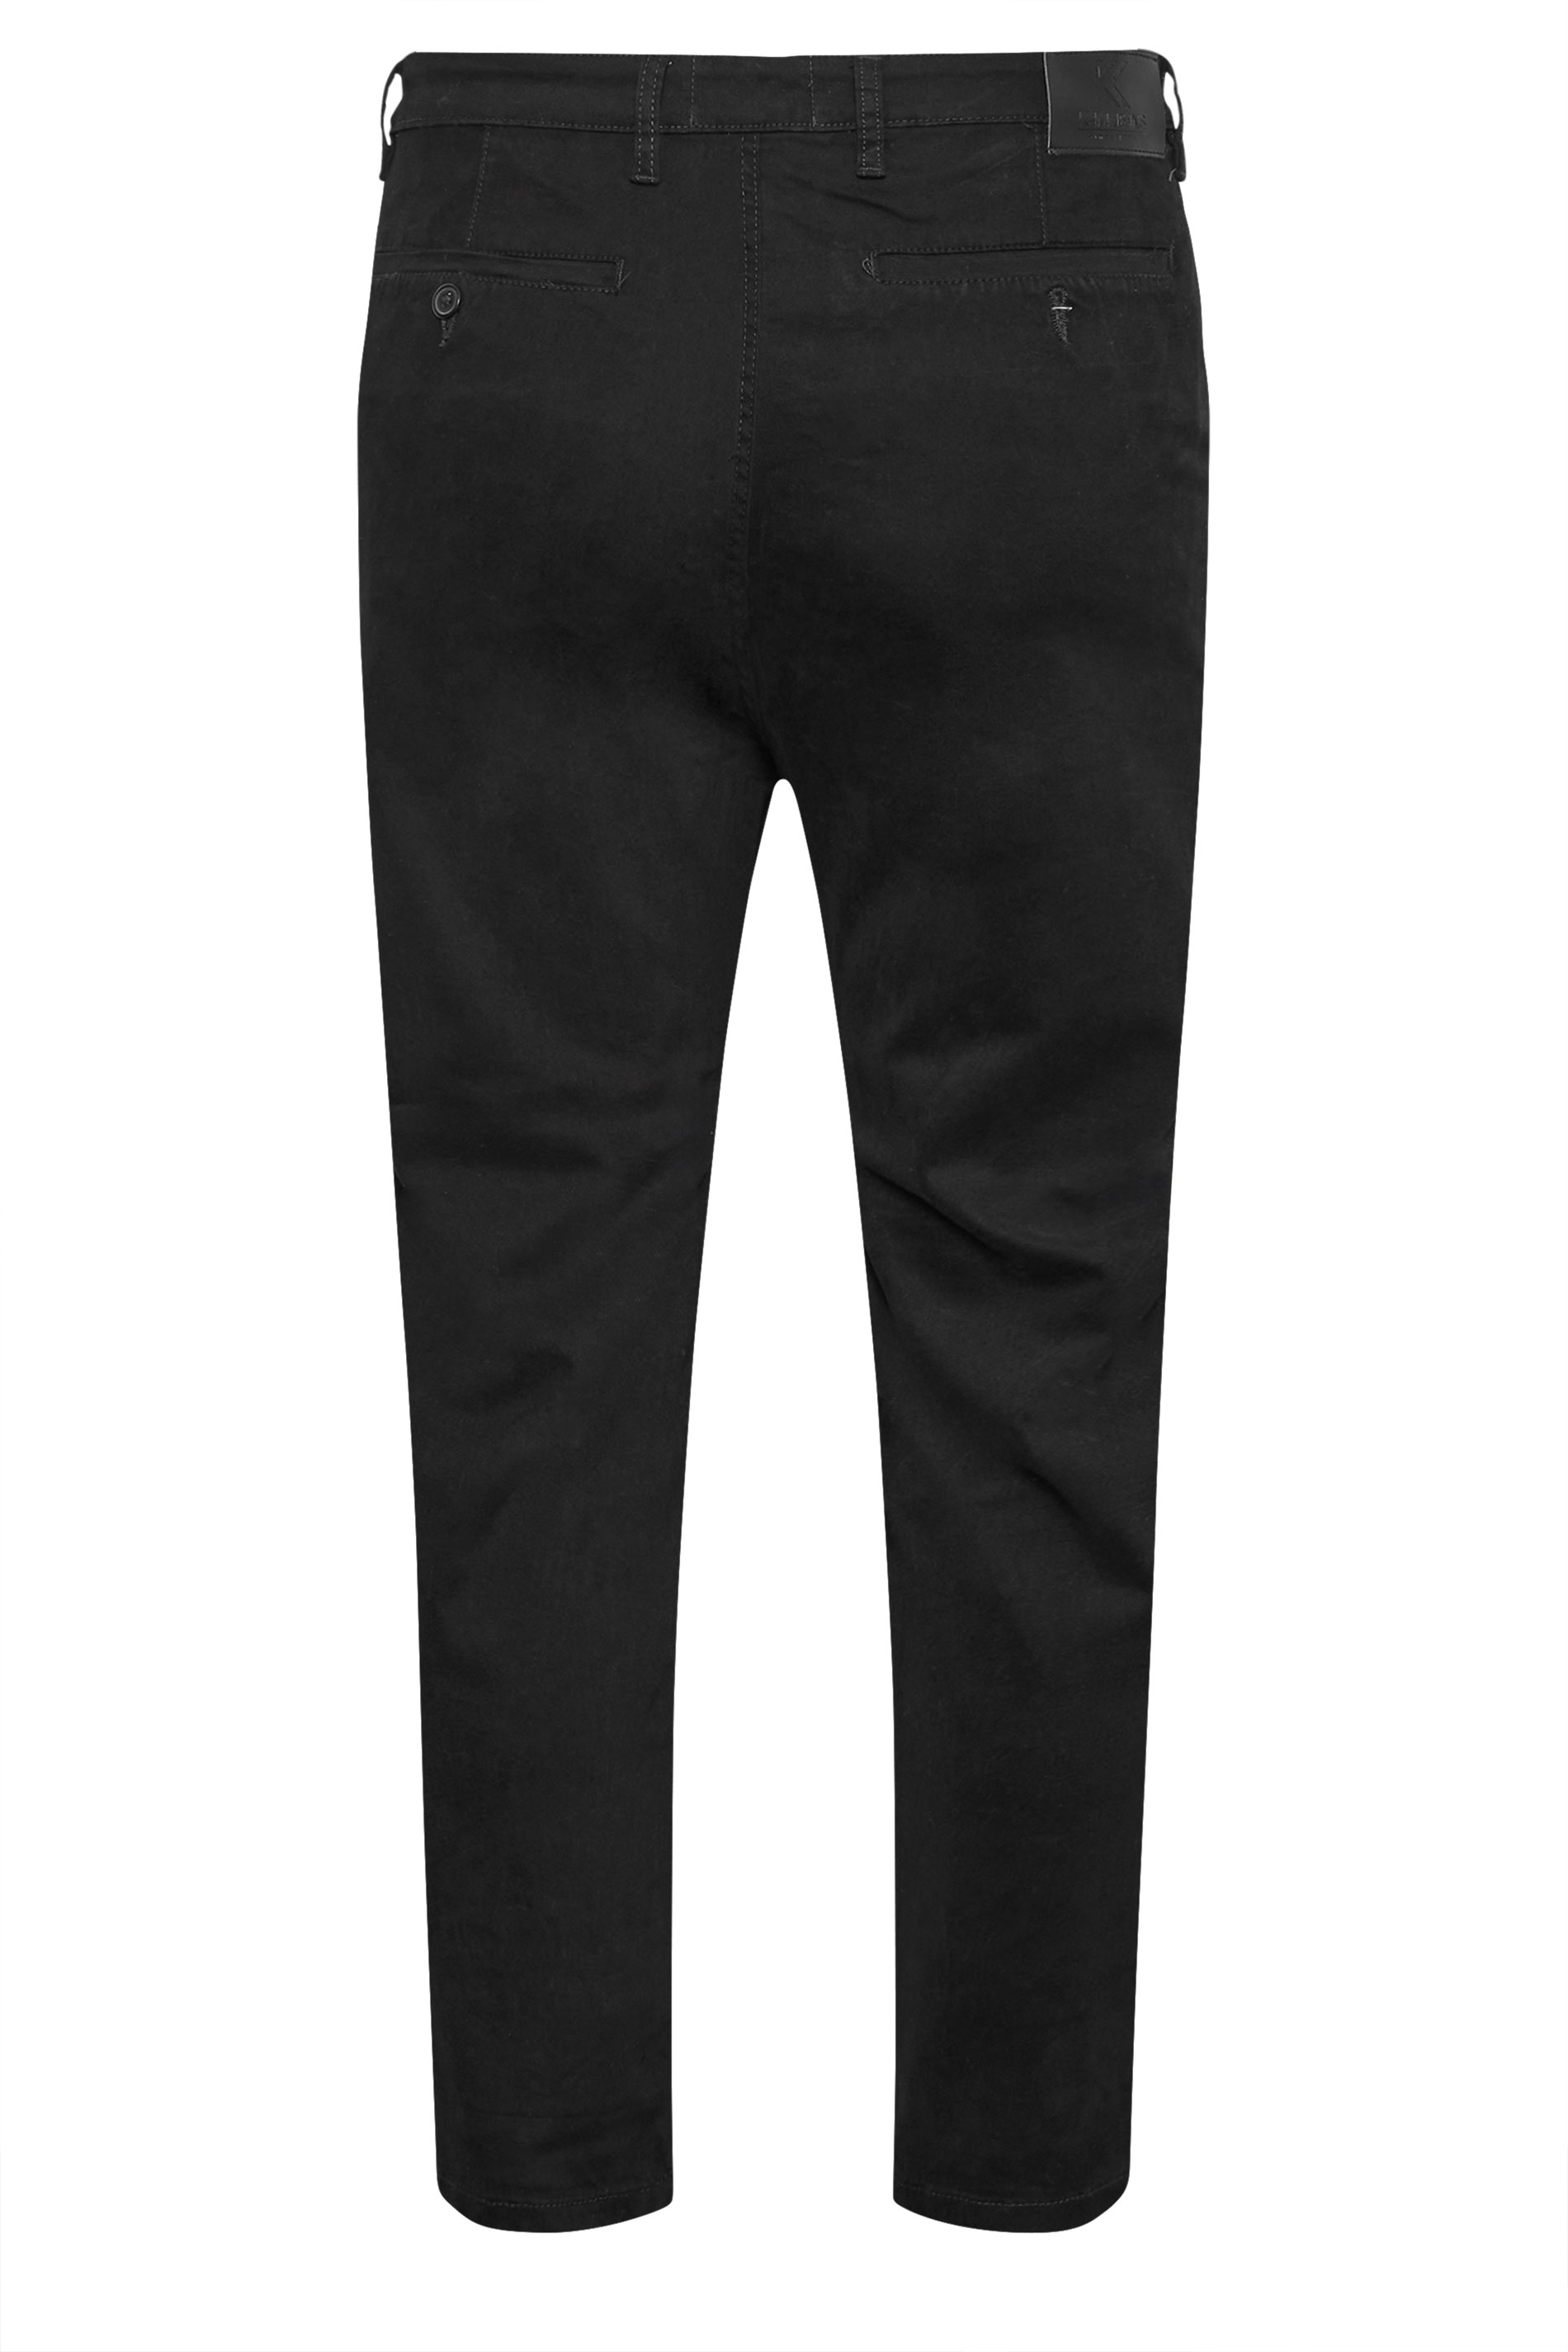 KAM Big & Tall Black Stretch Chino Trousers | BadRhino